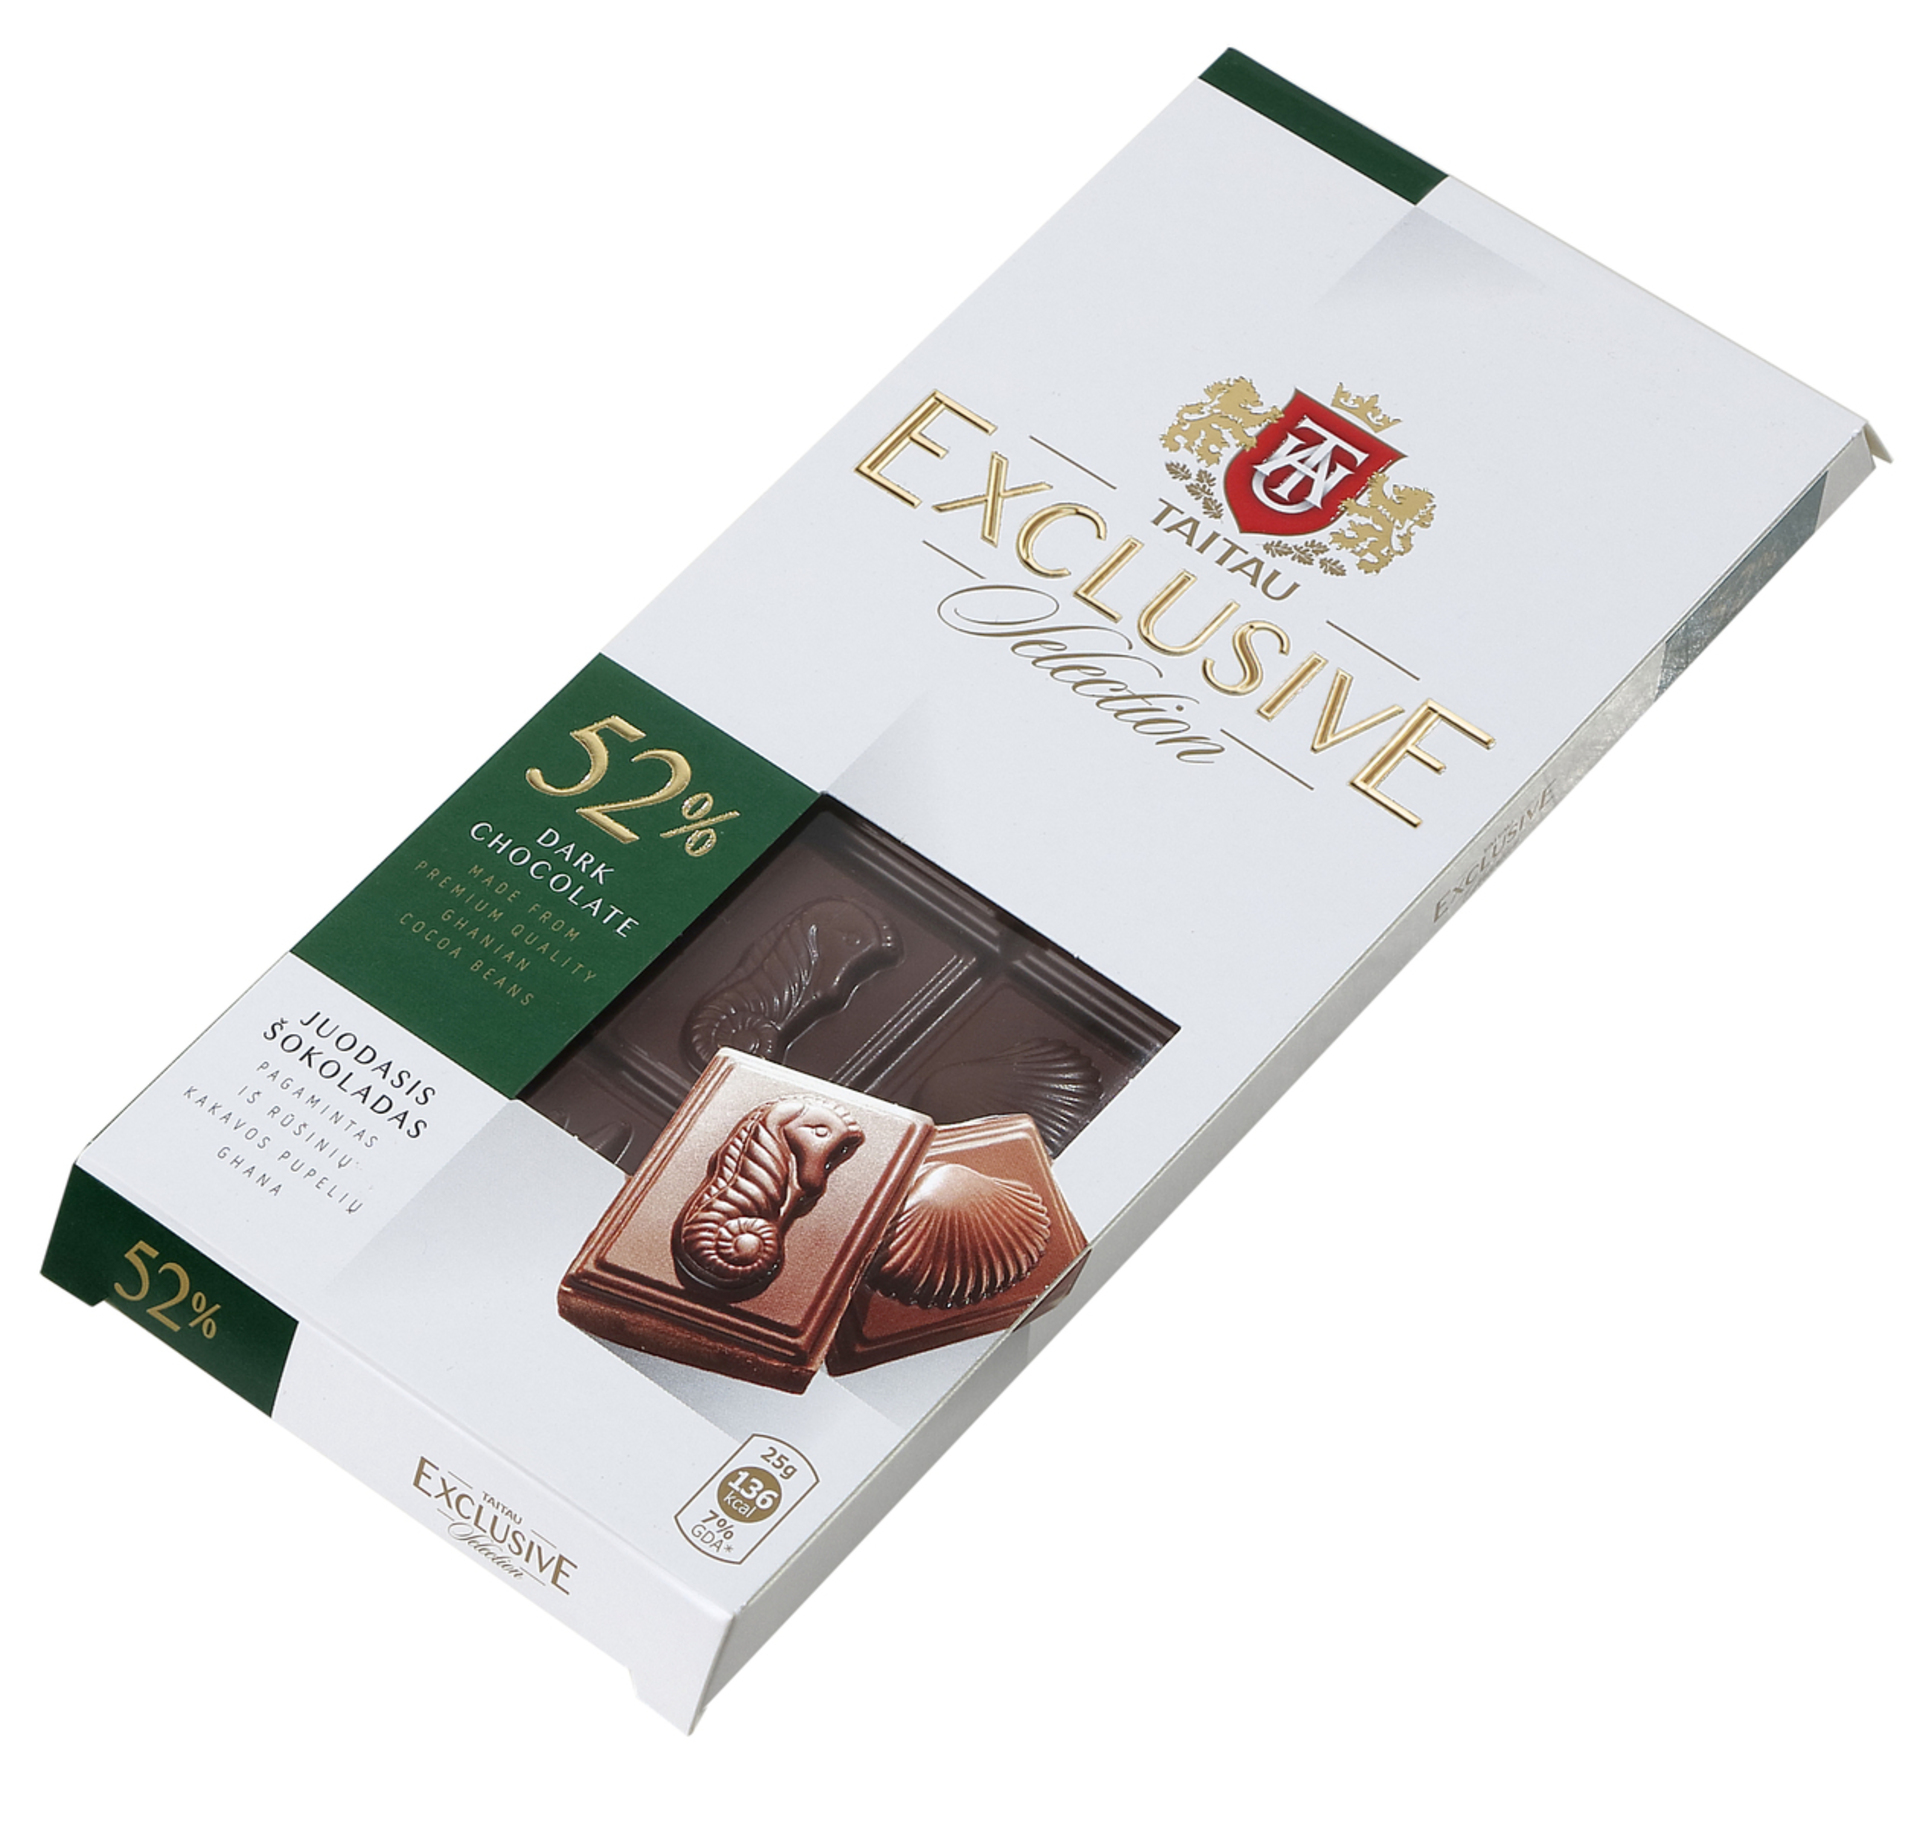 Taitau Exclusive Selection Horká čokoláda 52% 100 g